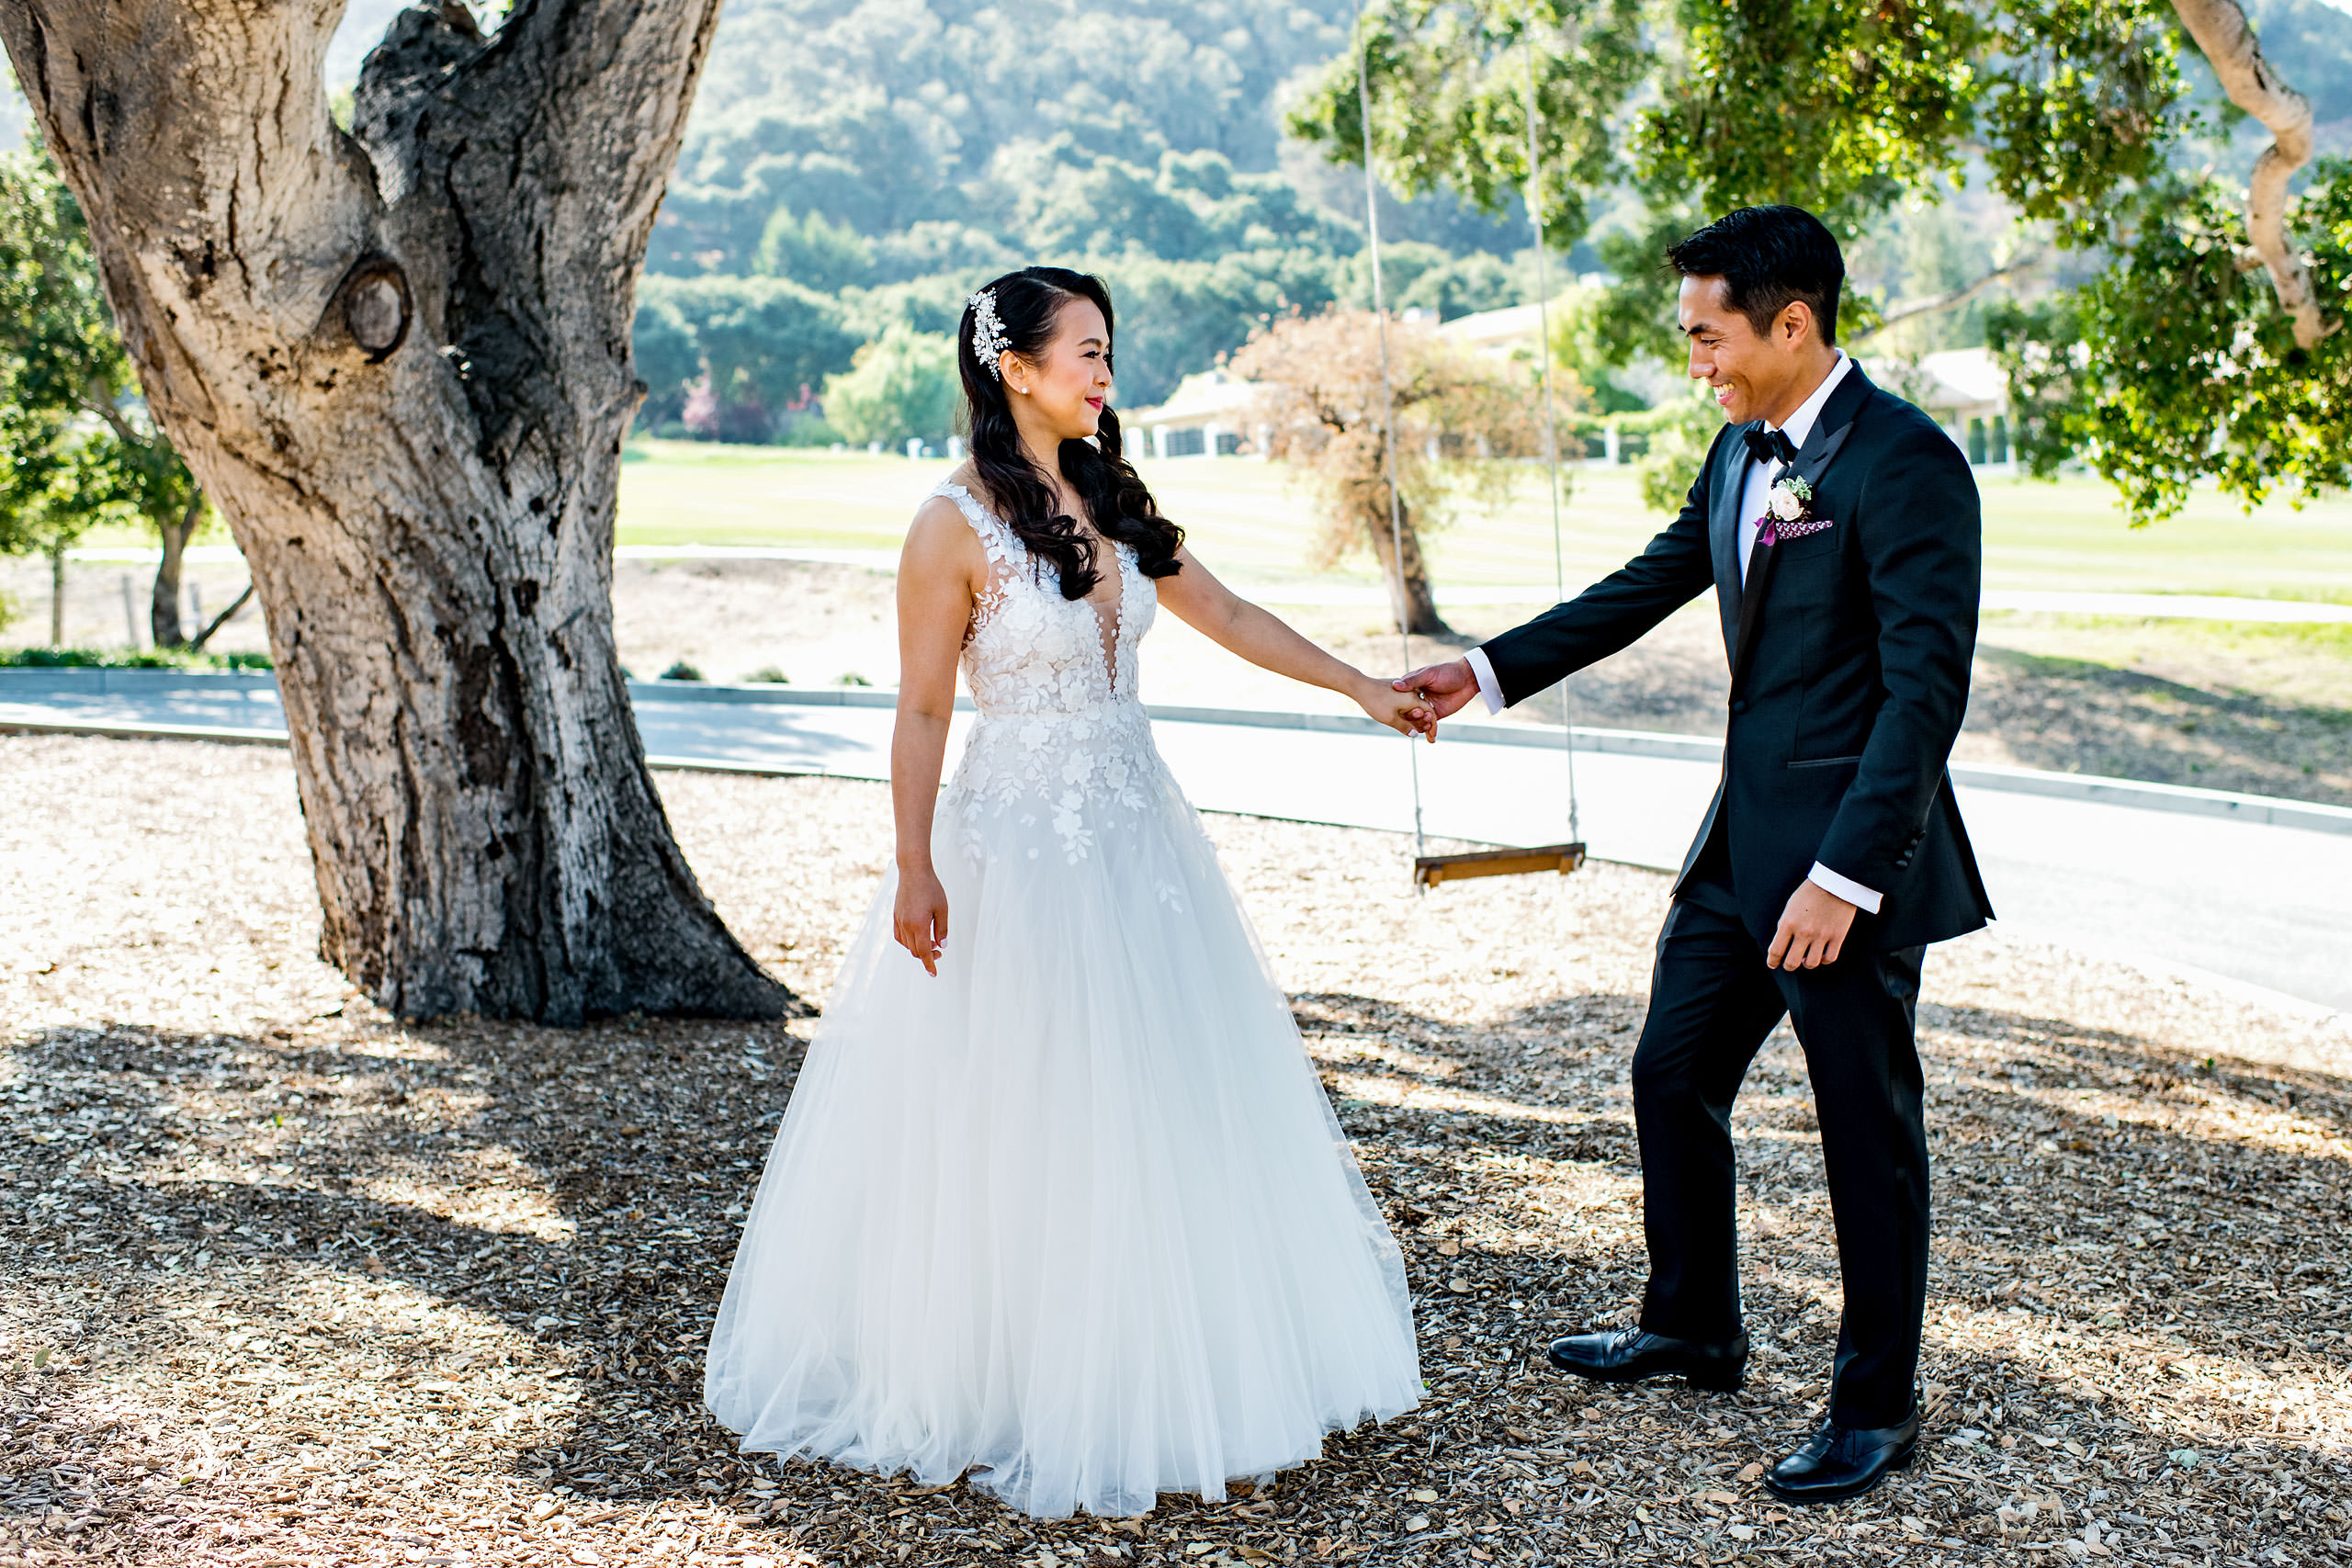 First look by a swing by Carmel Valley Ranch Wedding Photographer Sean LeBlanc